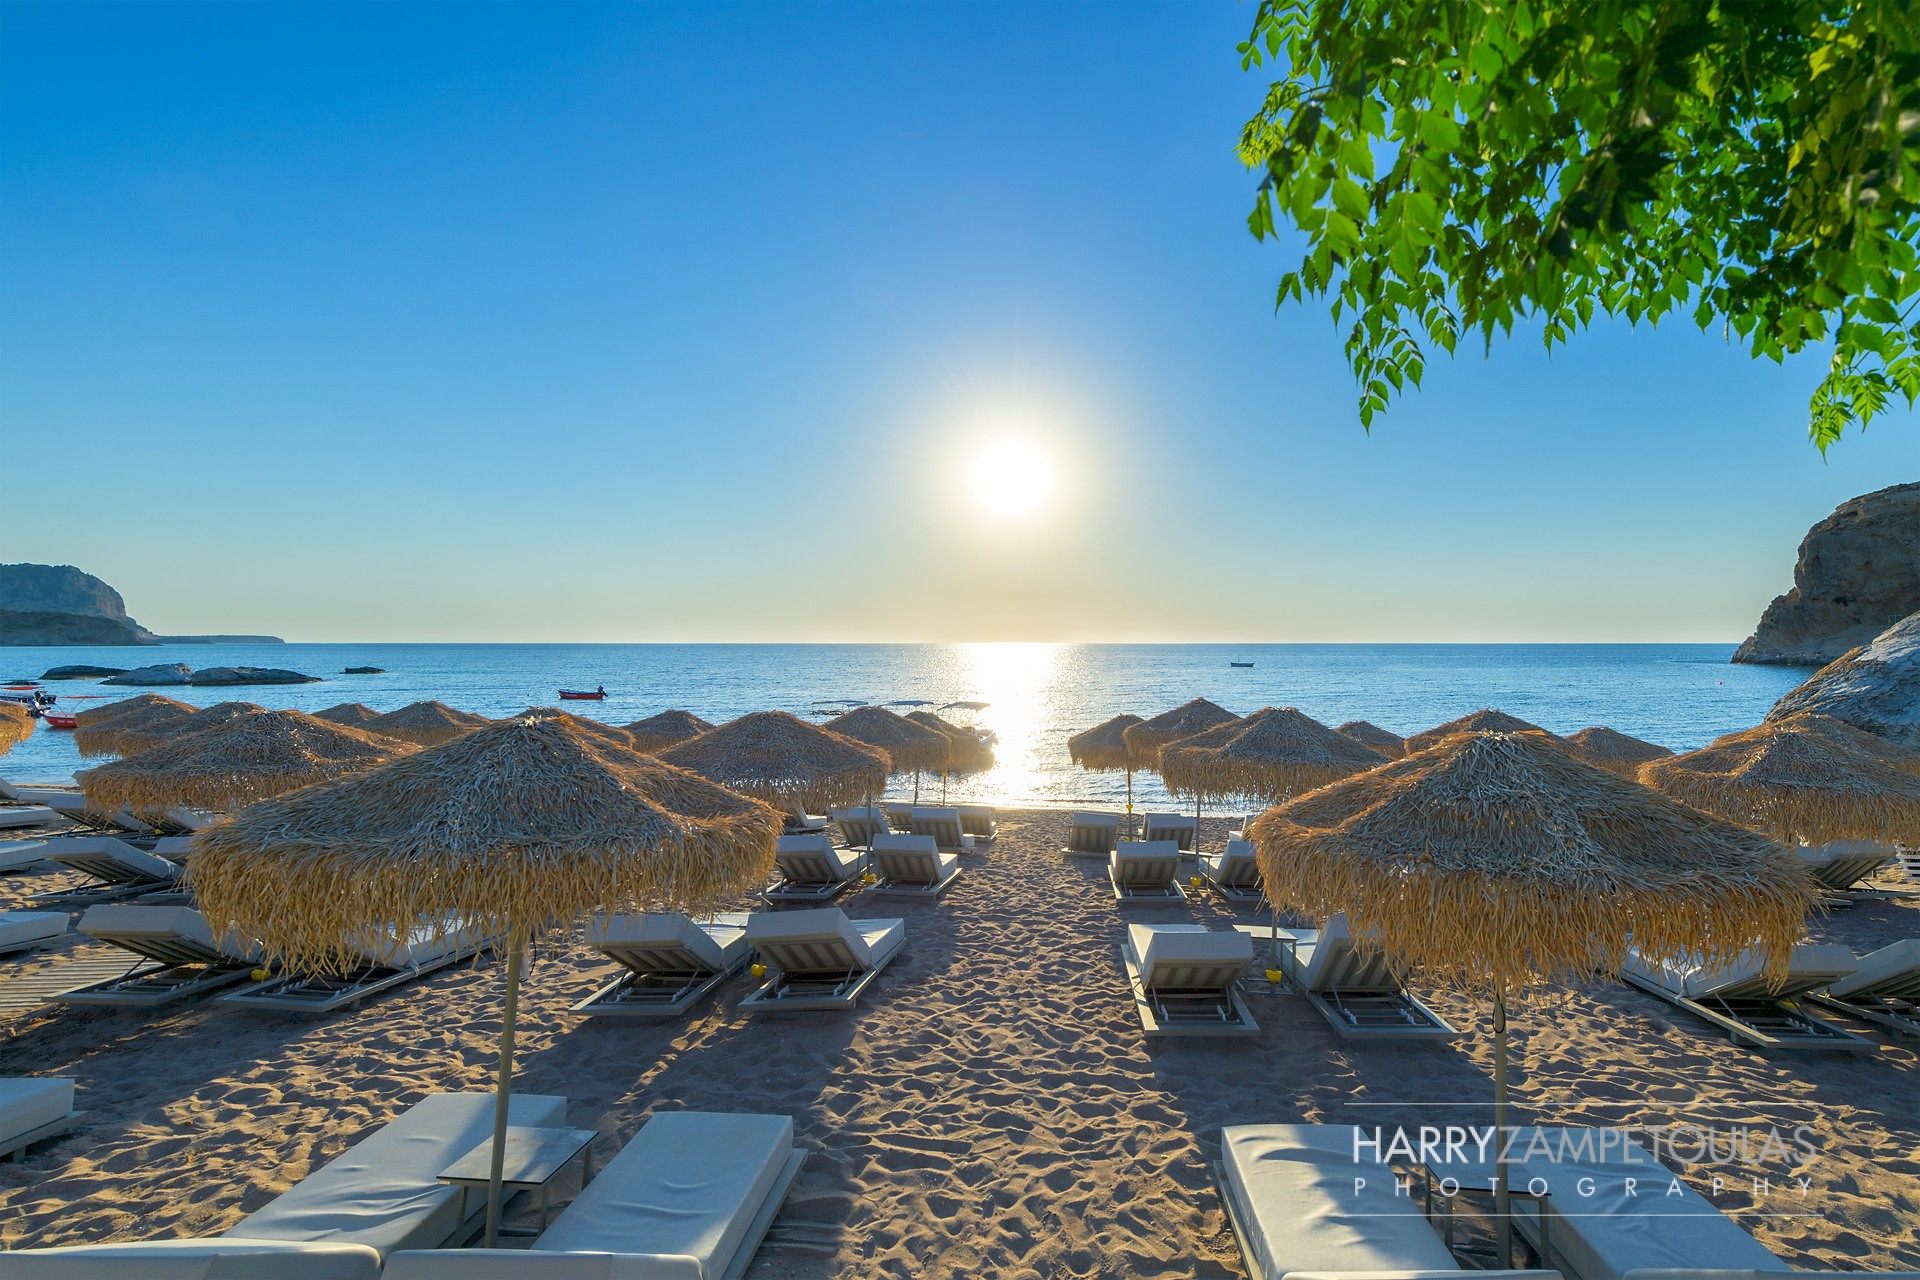 Beach-3 Porto Angeli Resort Hotel - Hotel Photography Harry Zampetoulas 